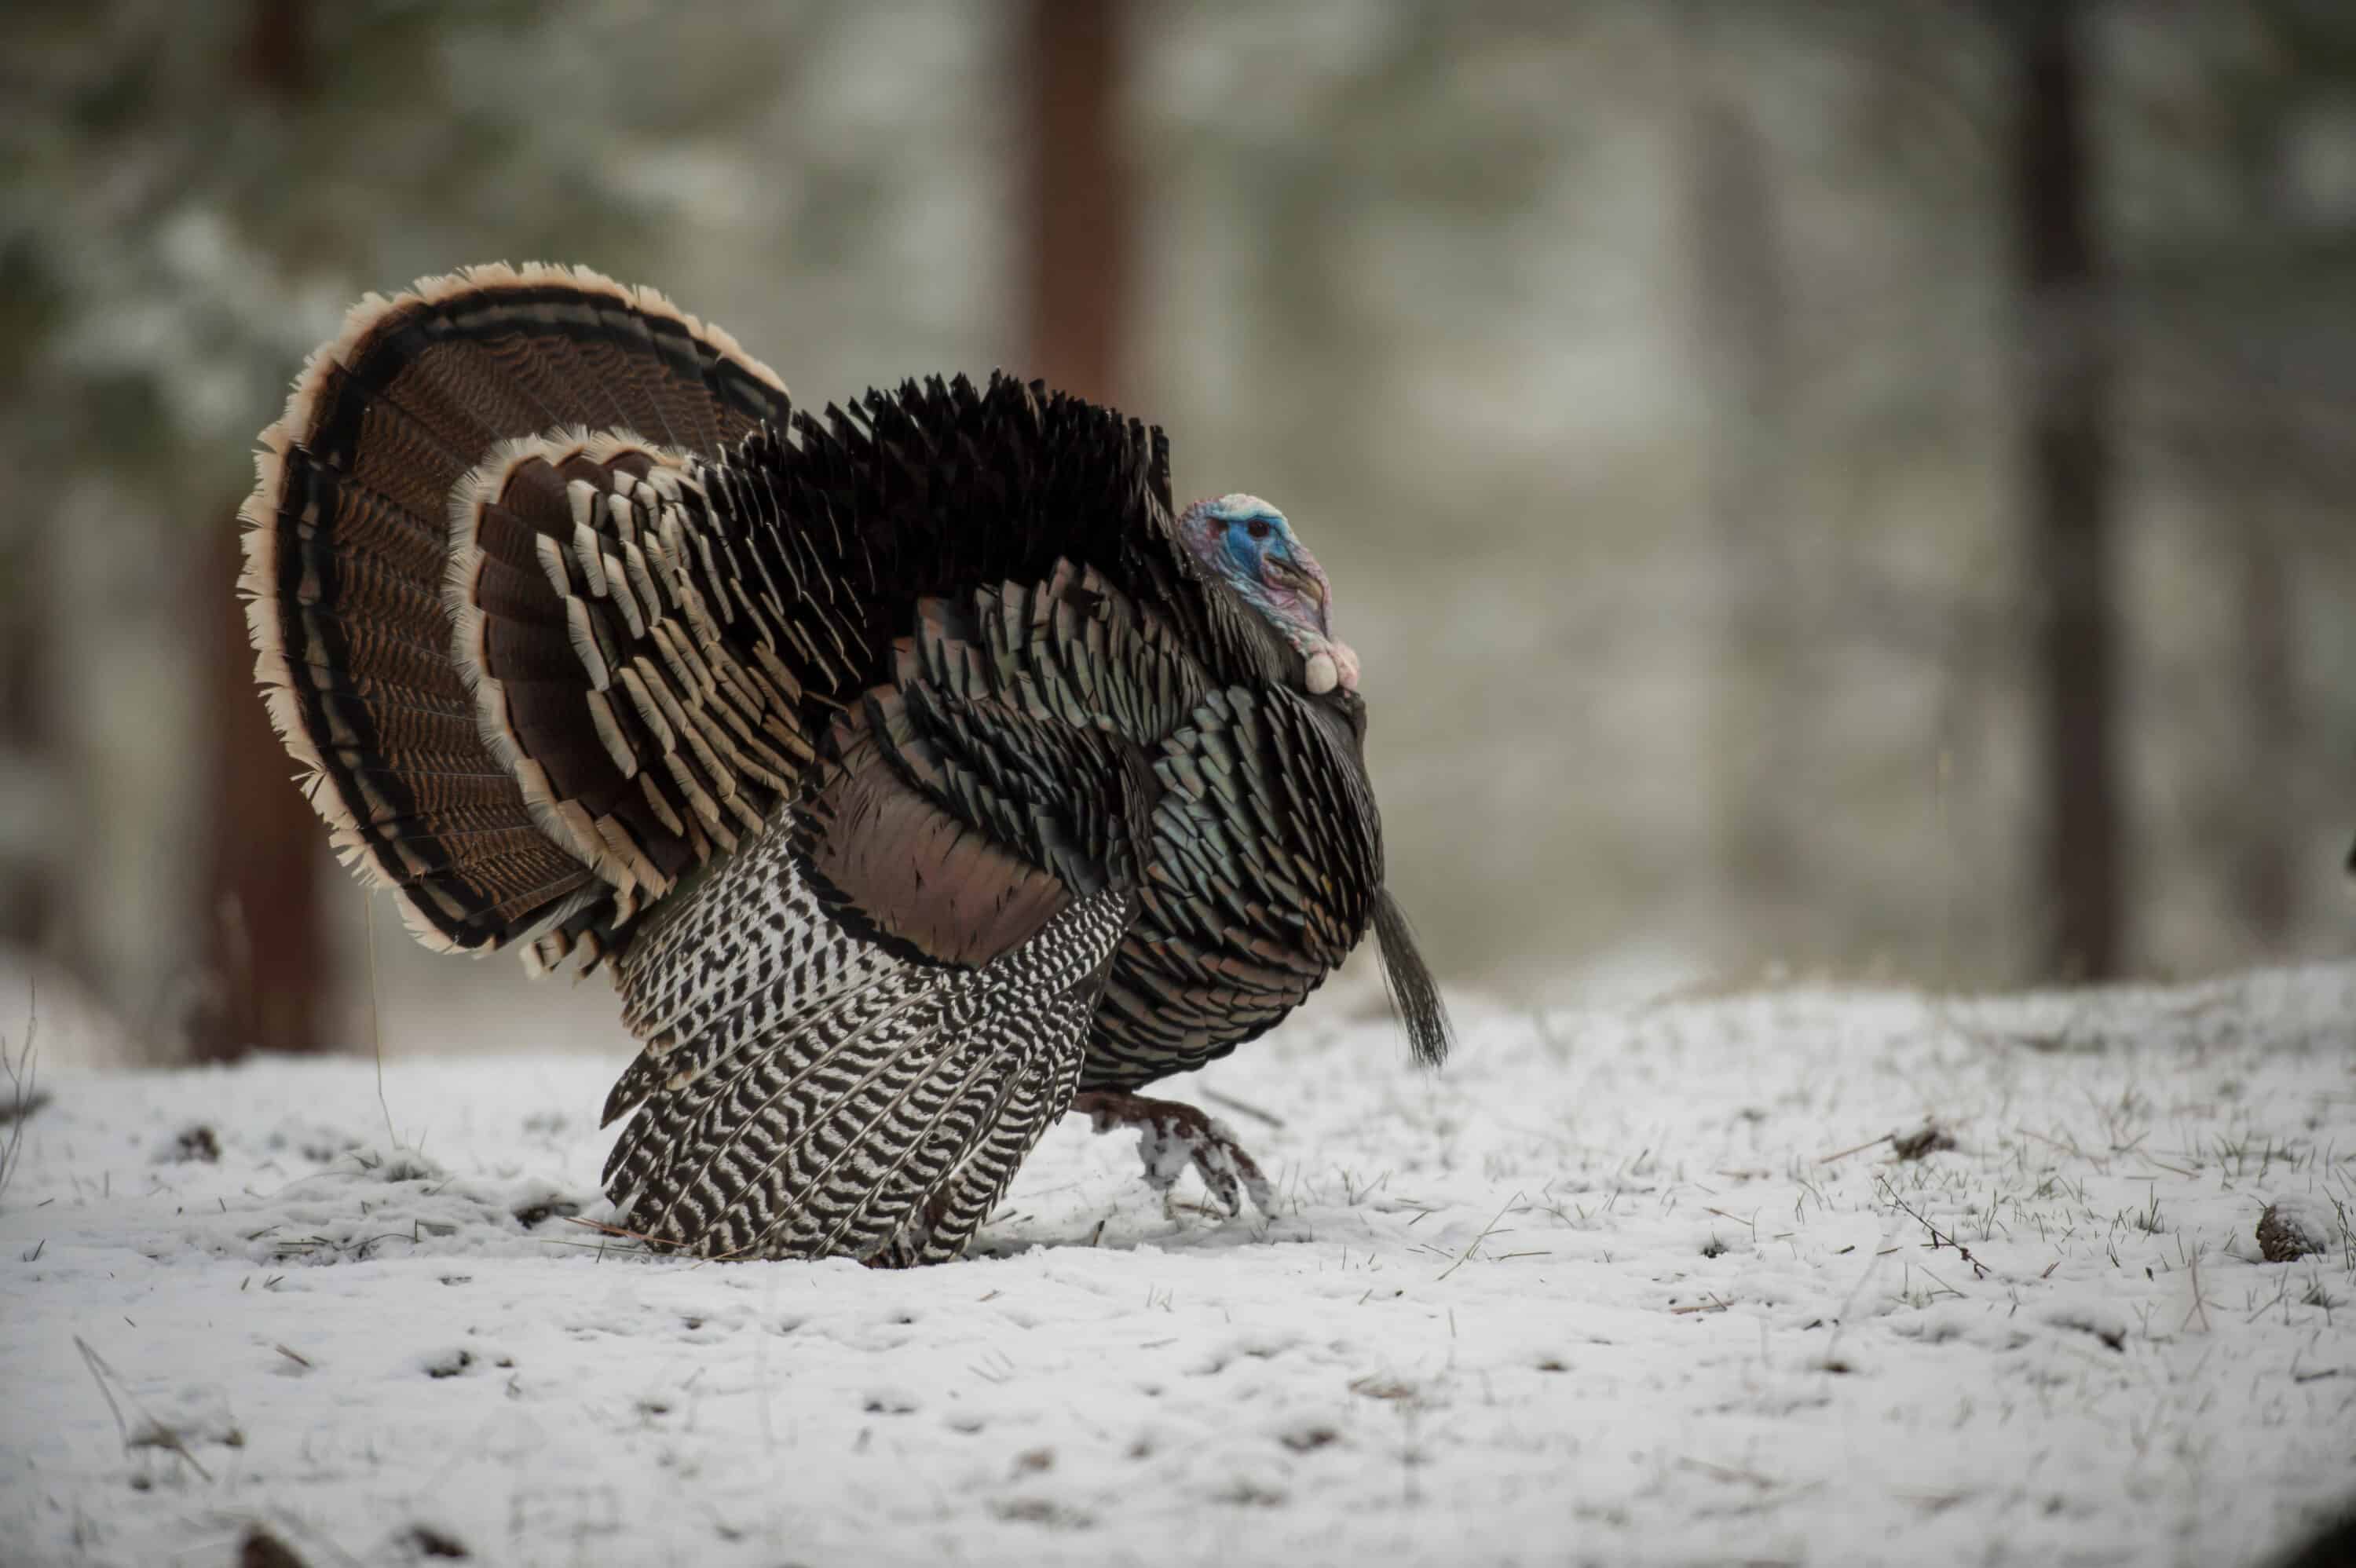 Western turkey adventures aren't easy. Be prepared.